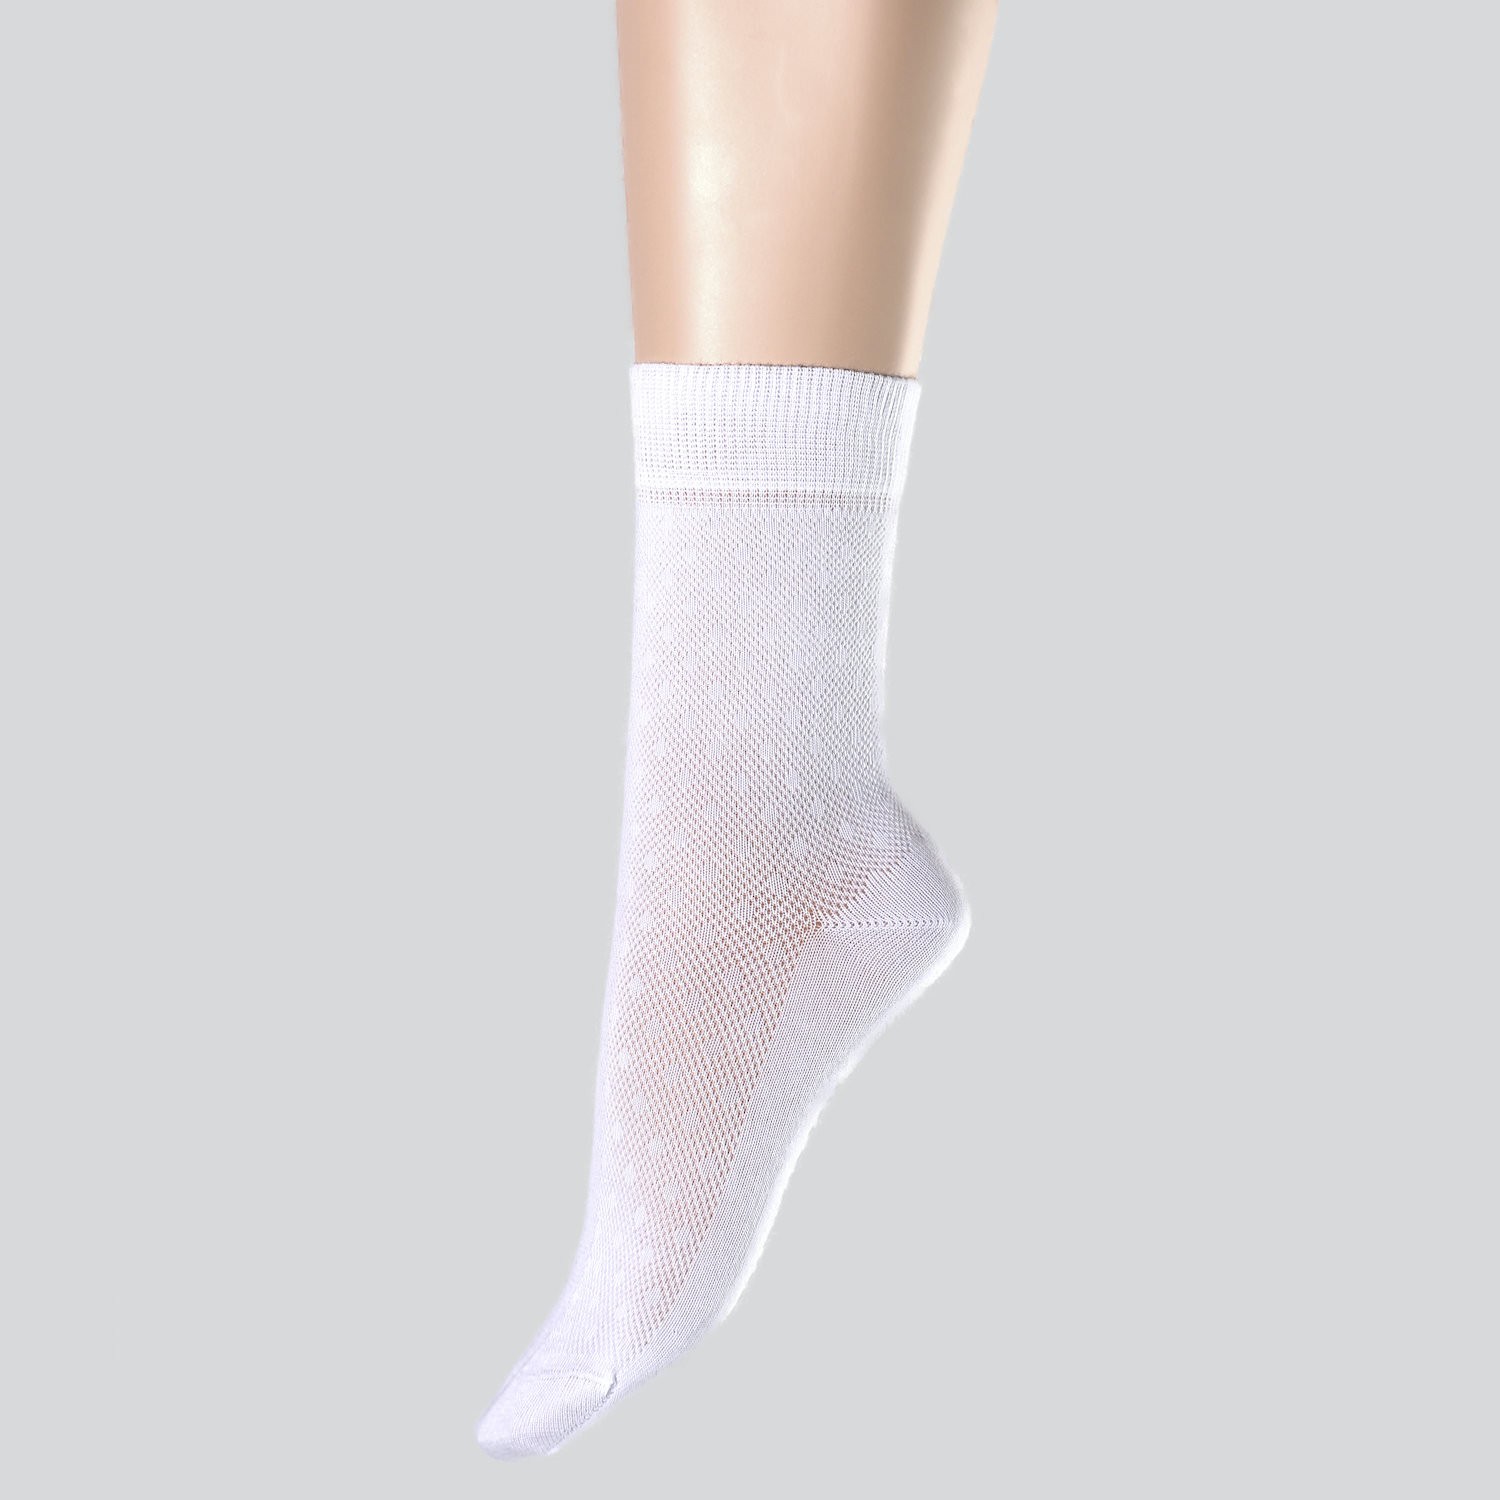 Airy socks